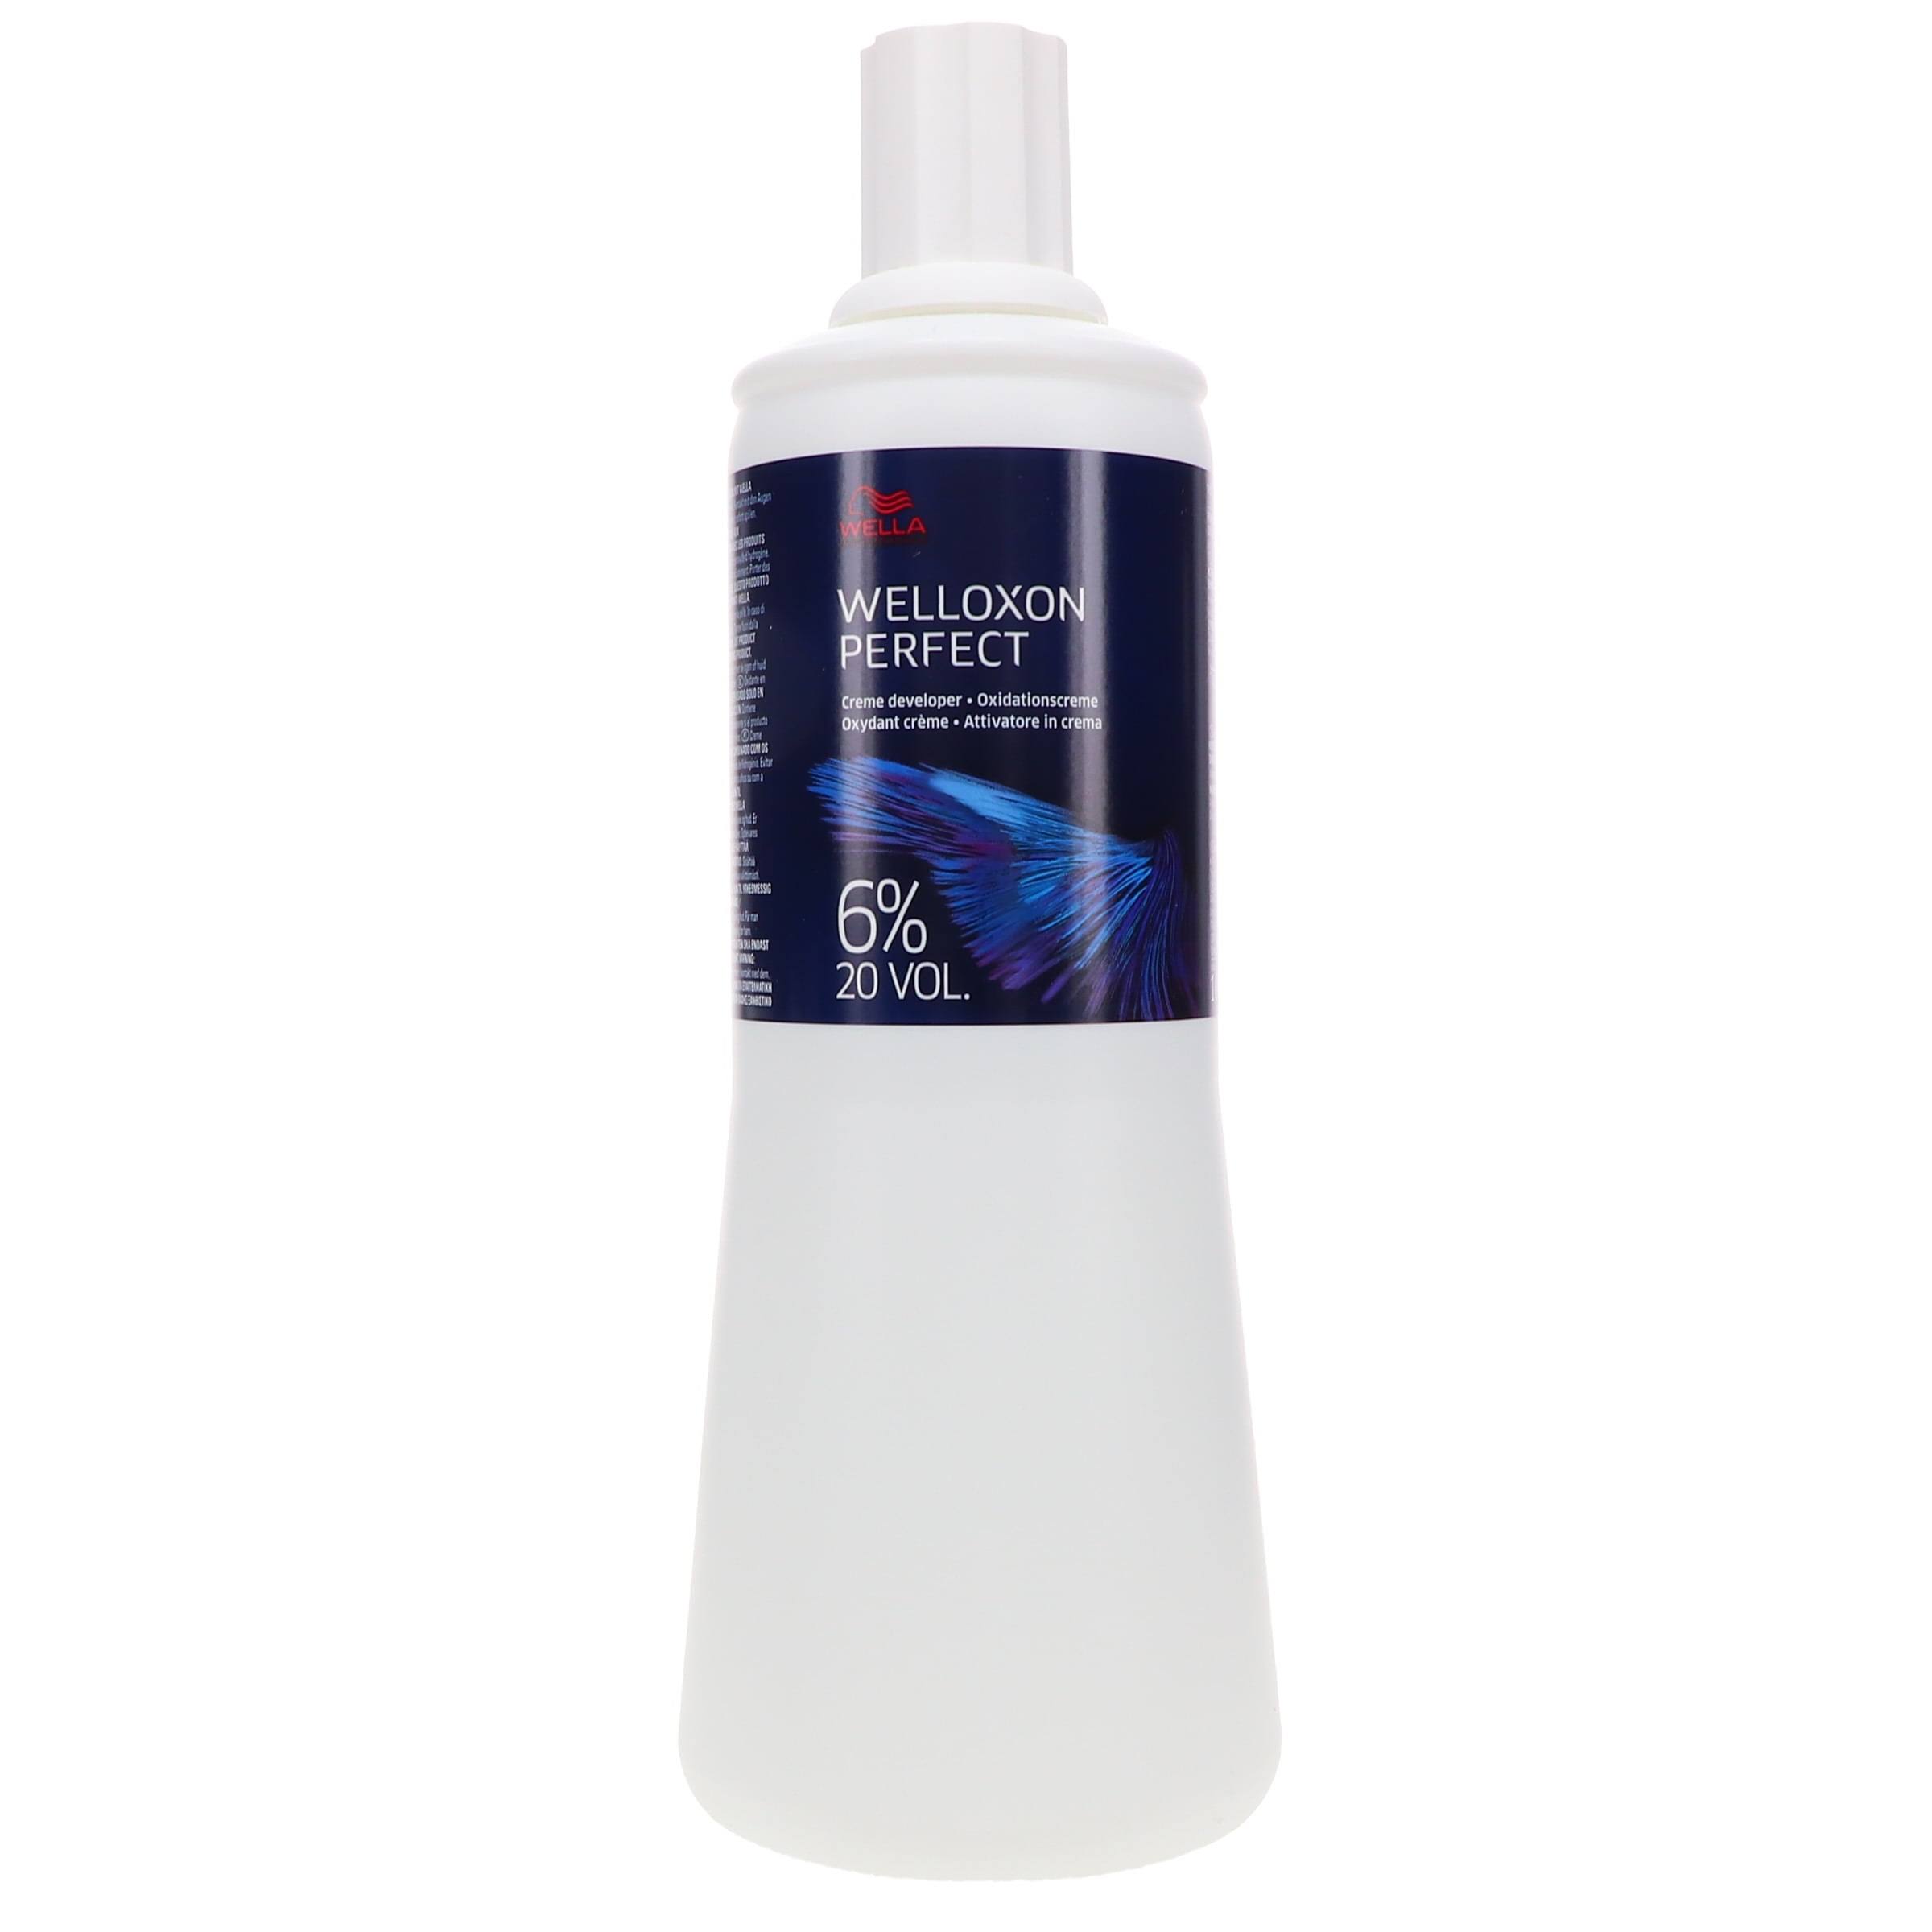 Ebin - Wonder Lace Bond Adhesive Spray Extreme Firm Hold Sensitive 6.08oz